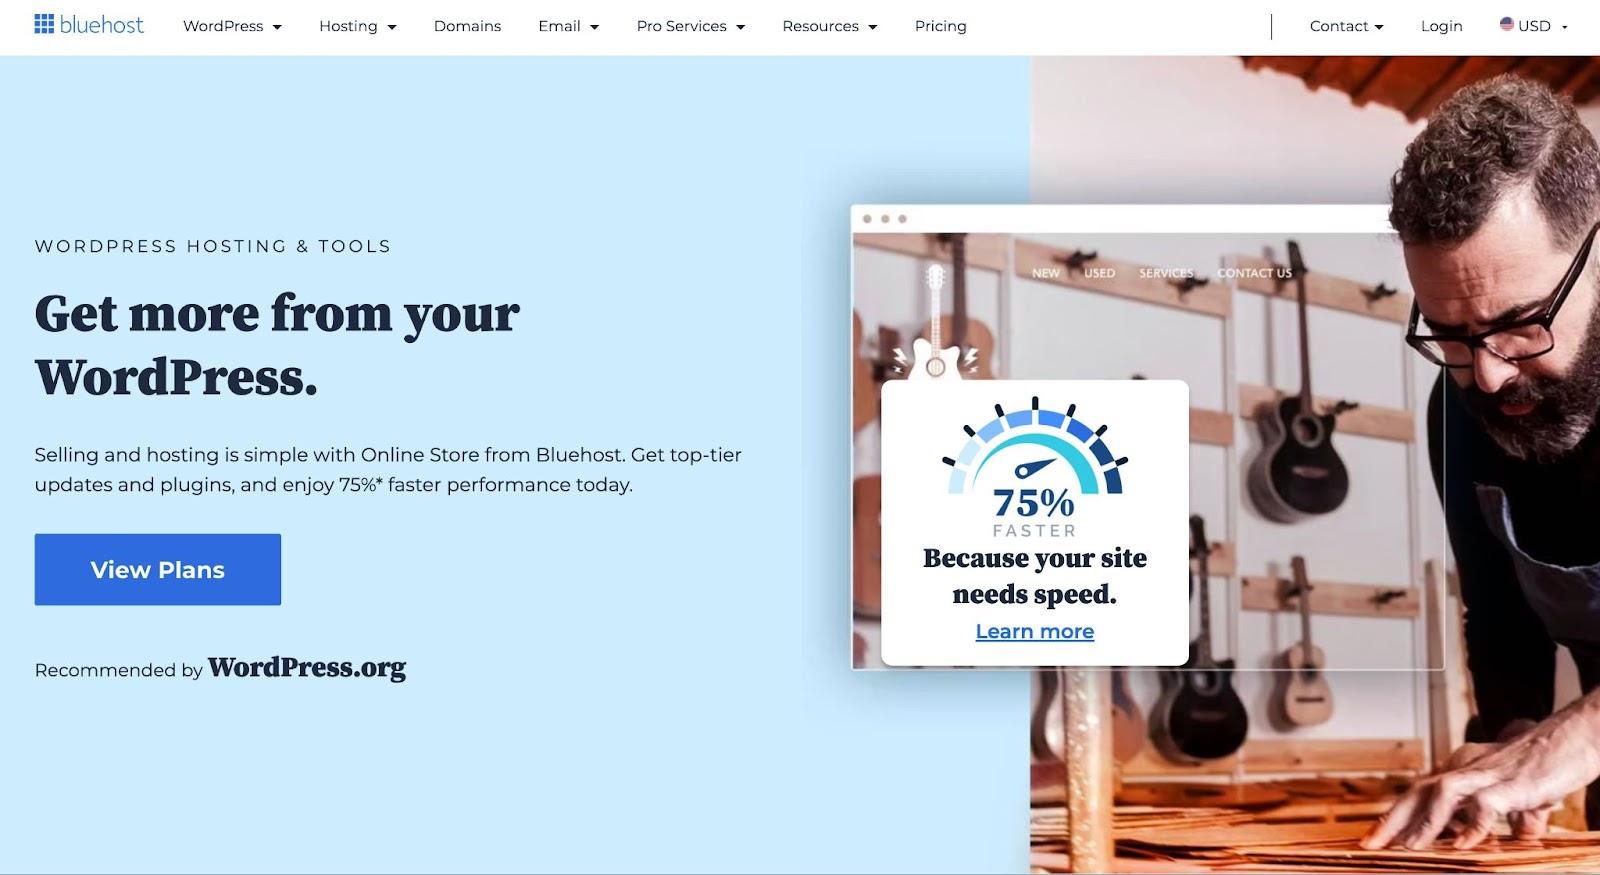 productpagina voor bluehost wordpress websitehosting